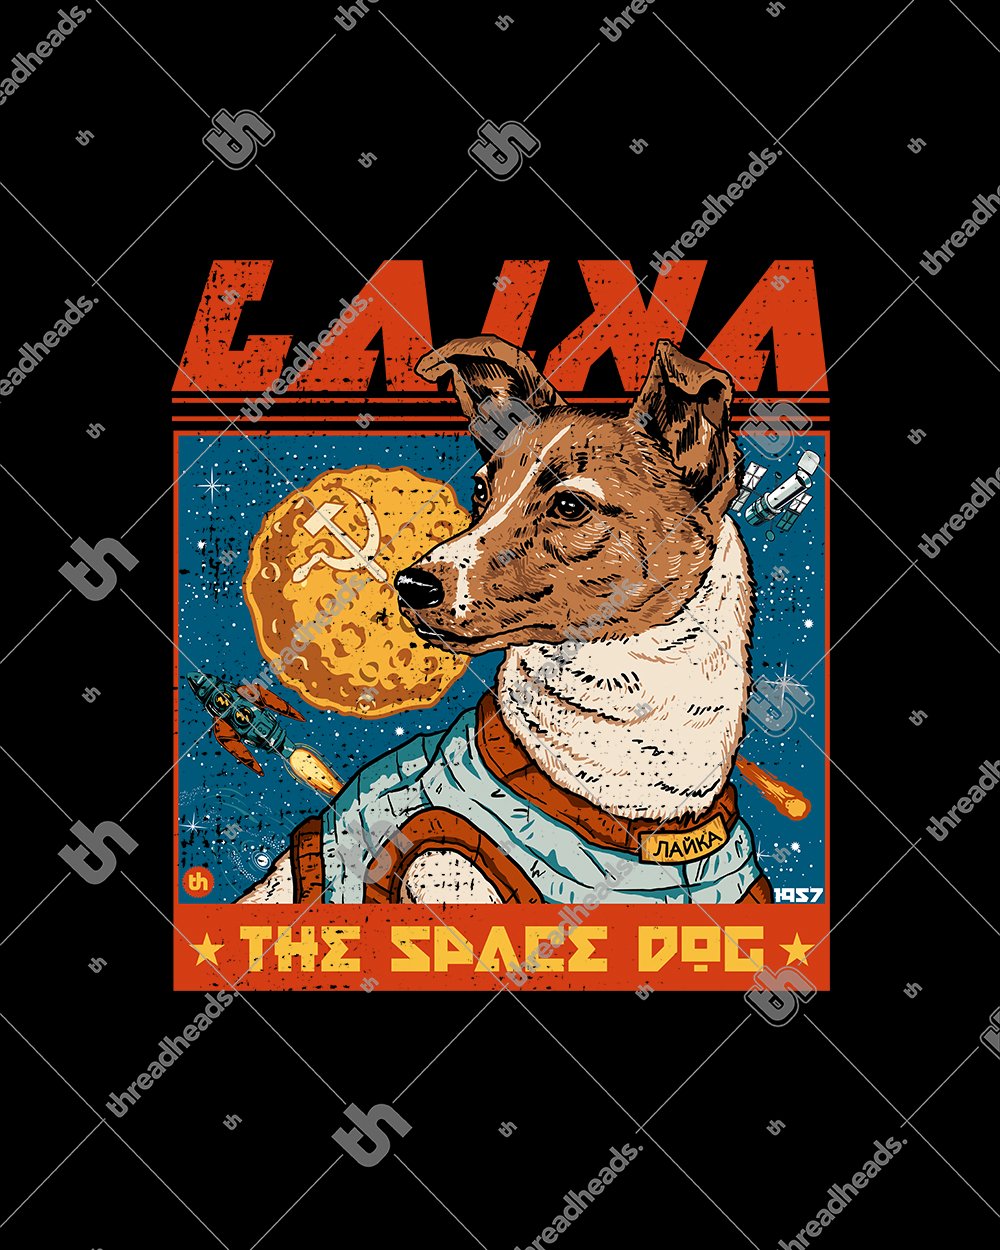 Laika the Space Dog Sweater Australia Online #colour_black